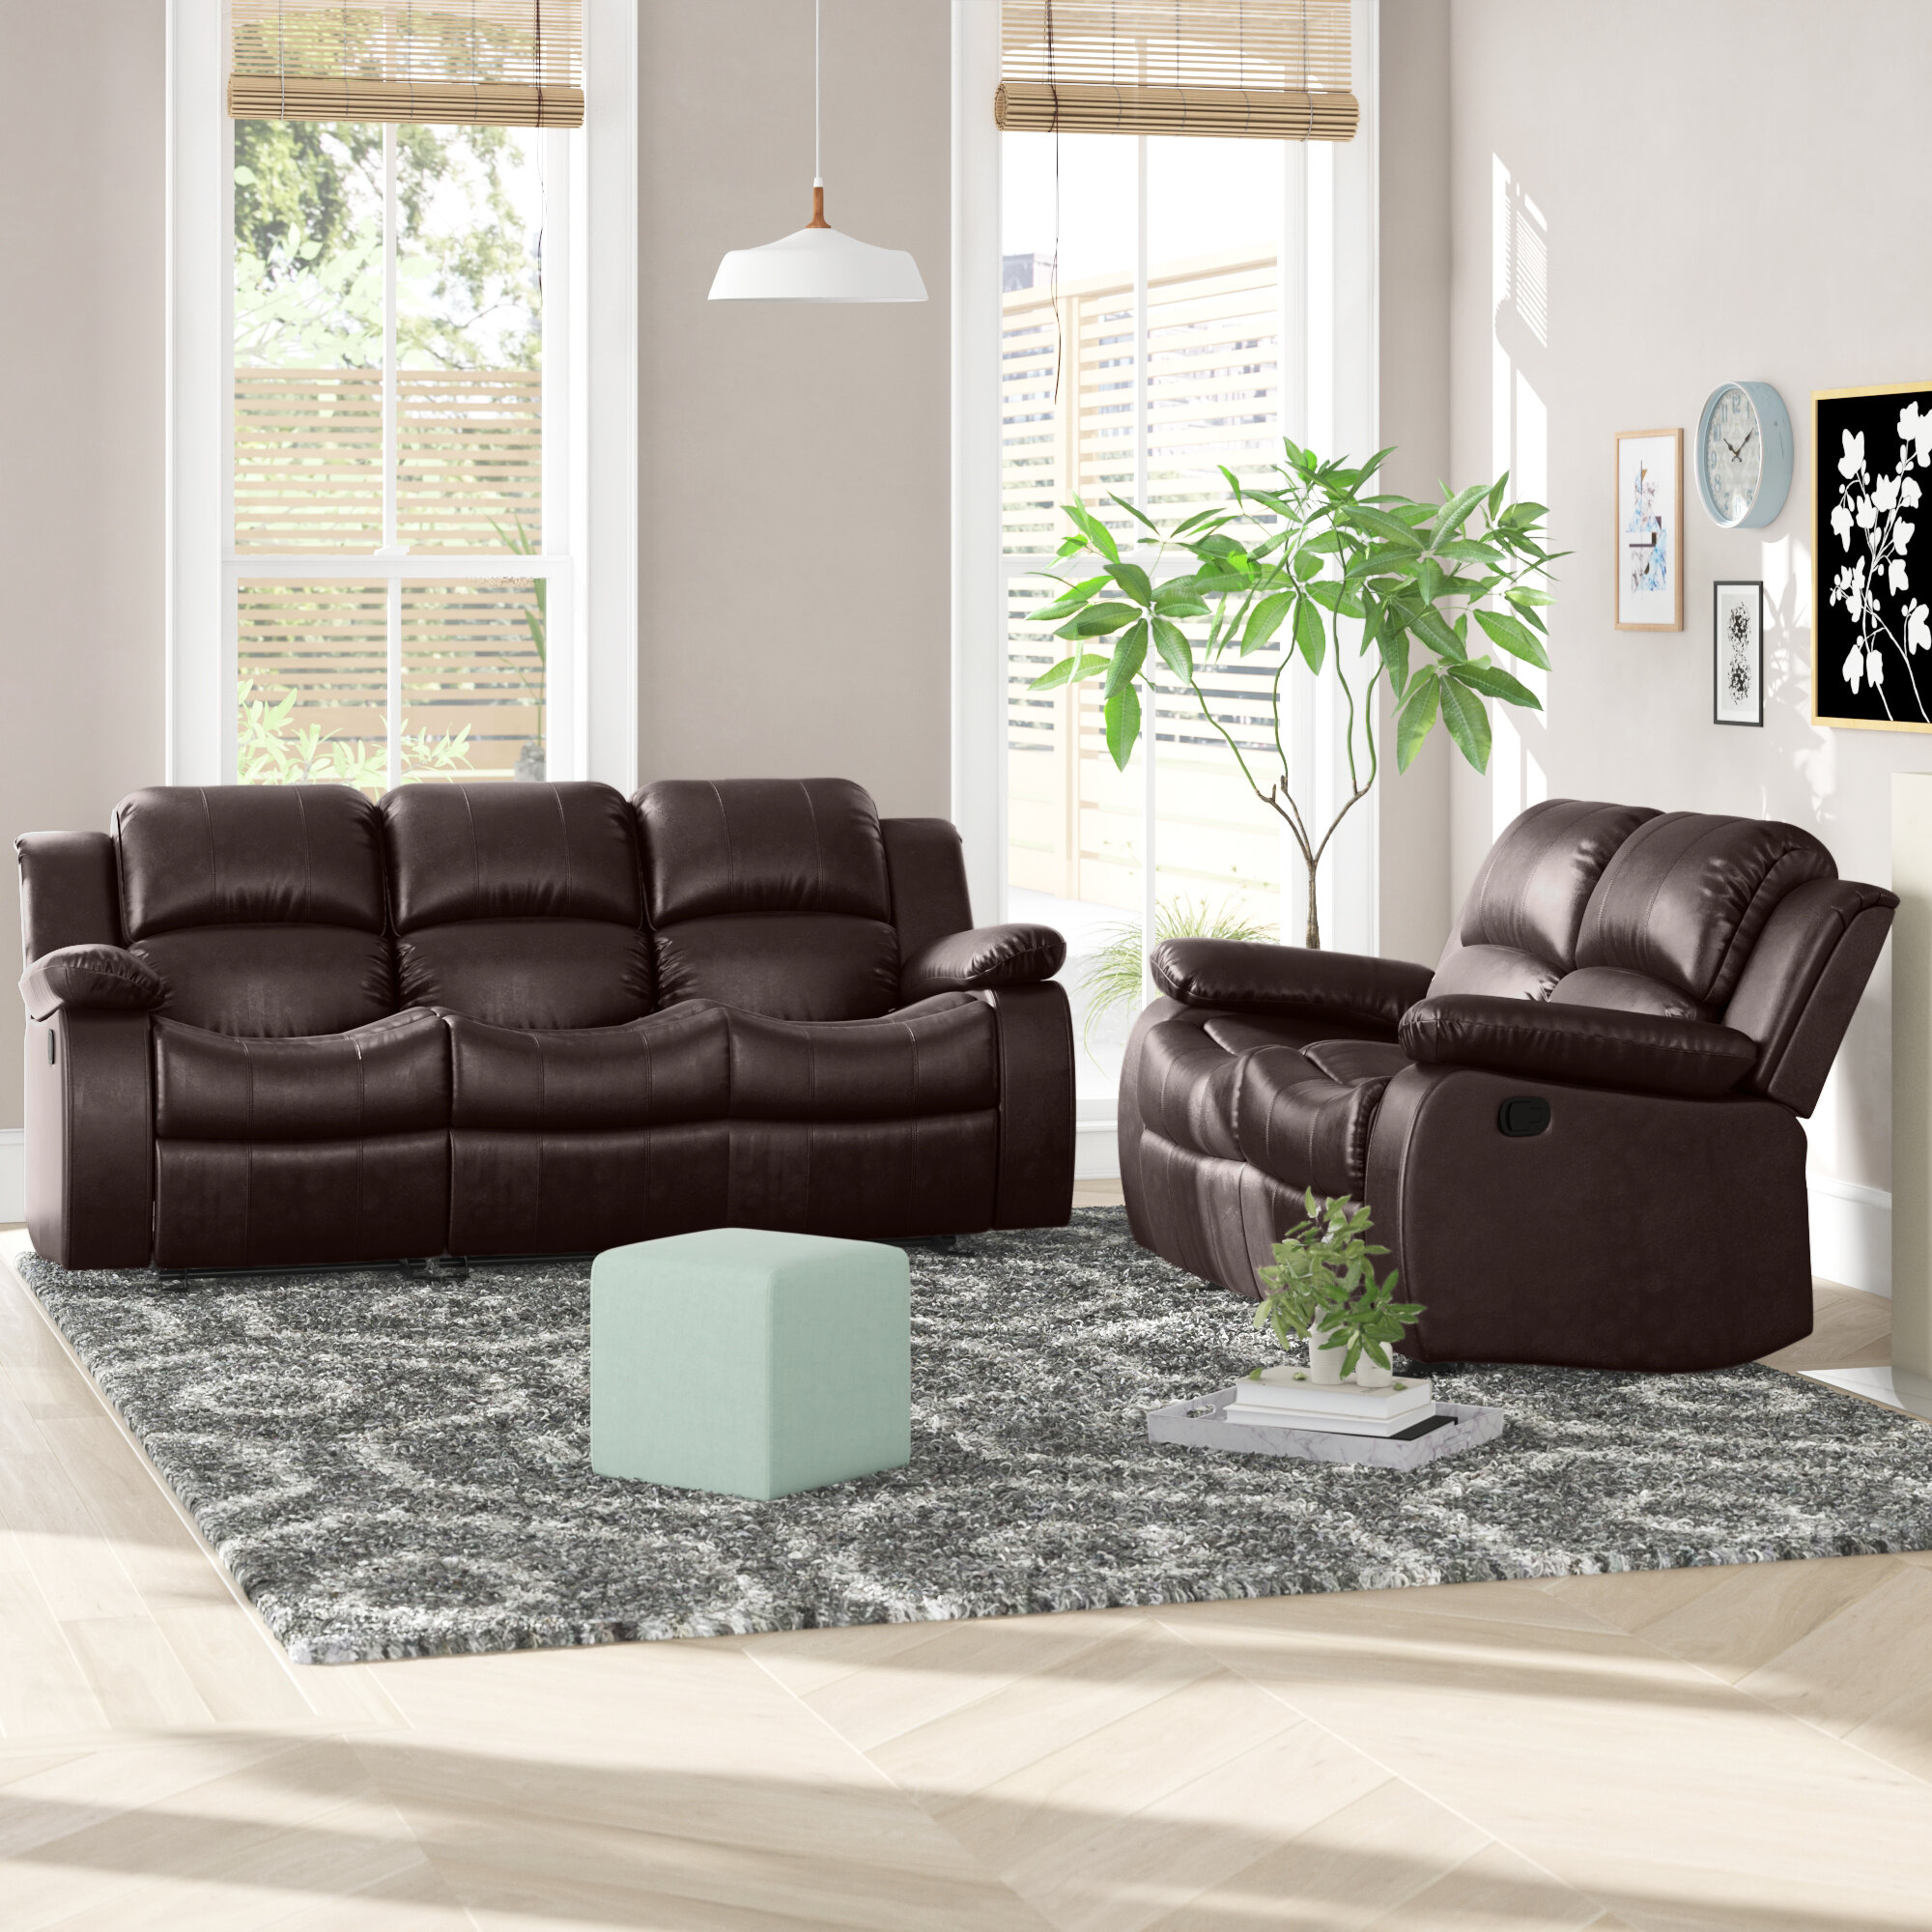 Latitude Run Bryce 2 Piece Faux Leather Reclining Living Room Set Reviews Wayfair